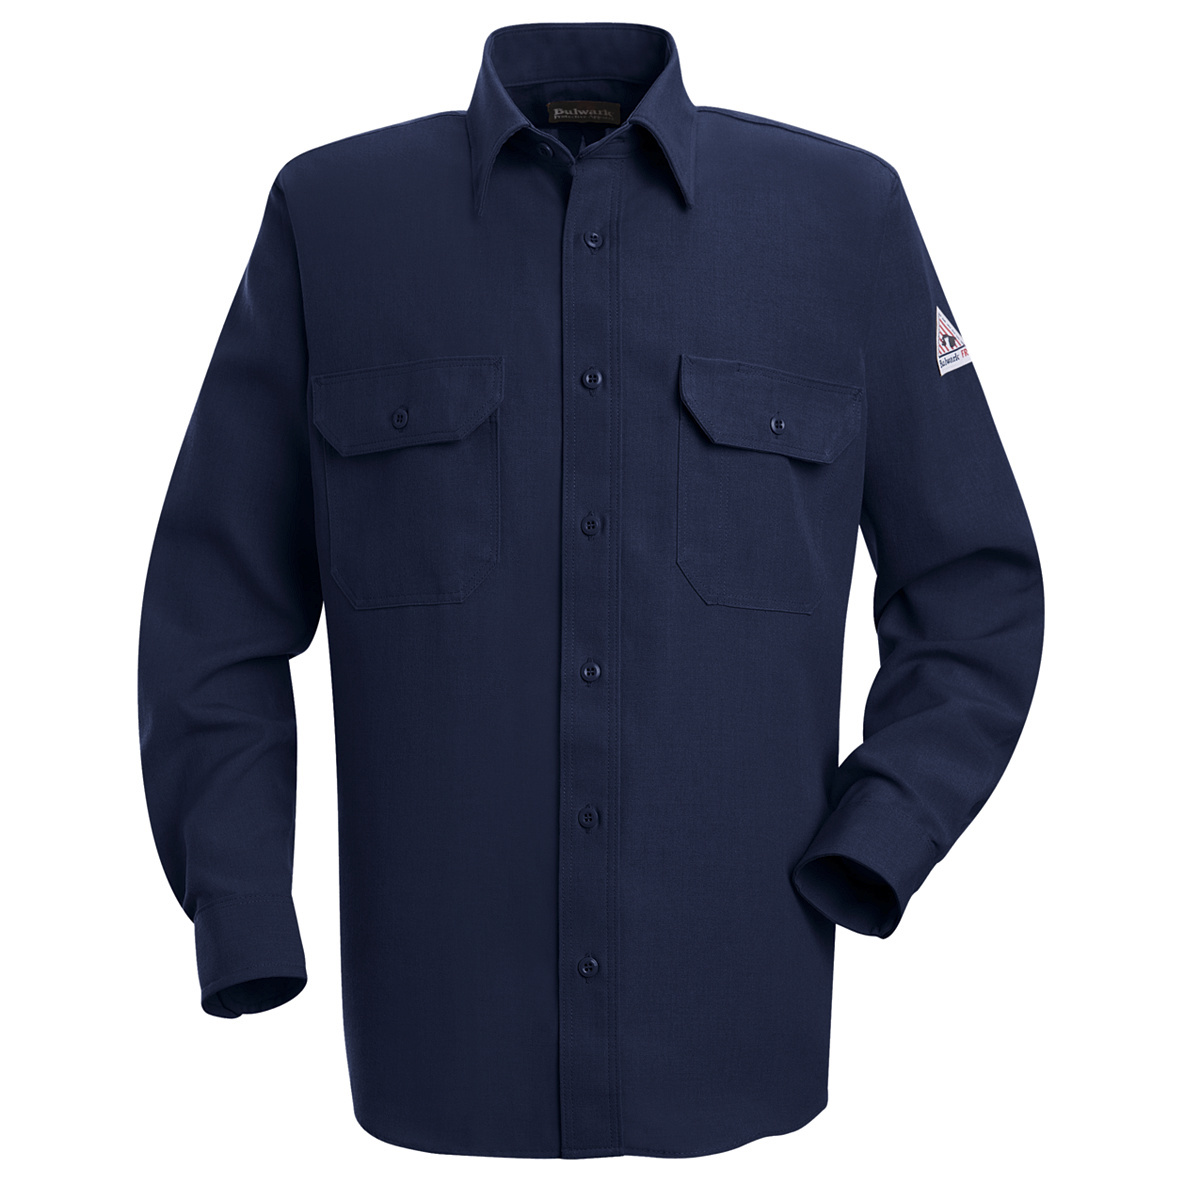 Bulwark® Medium Tall Navy Blue Nomex® IIIA/Nomex® Aramid/Kevlar® Aramid Flame Resistant Uniform Shirt With Button Front Closure